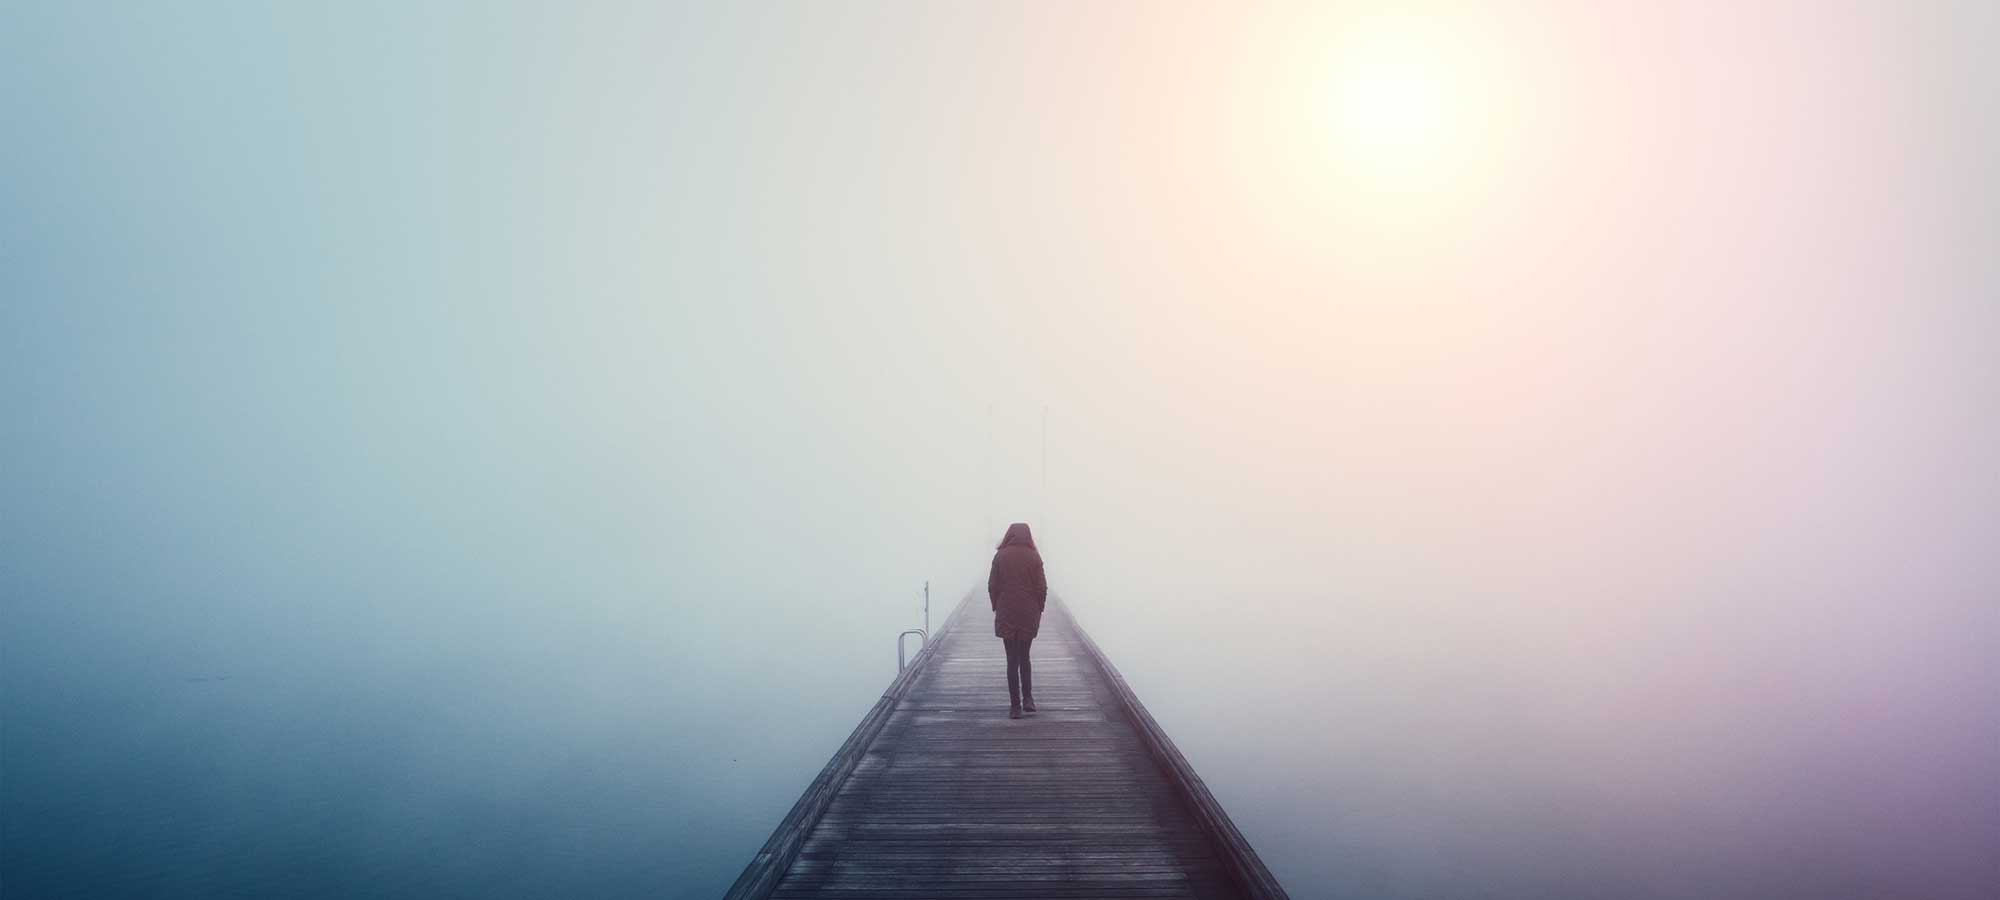 woman in coat walking on pier with fog